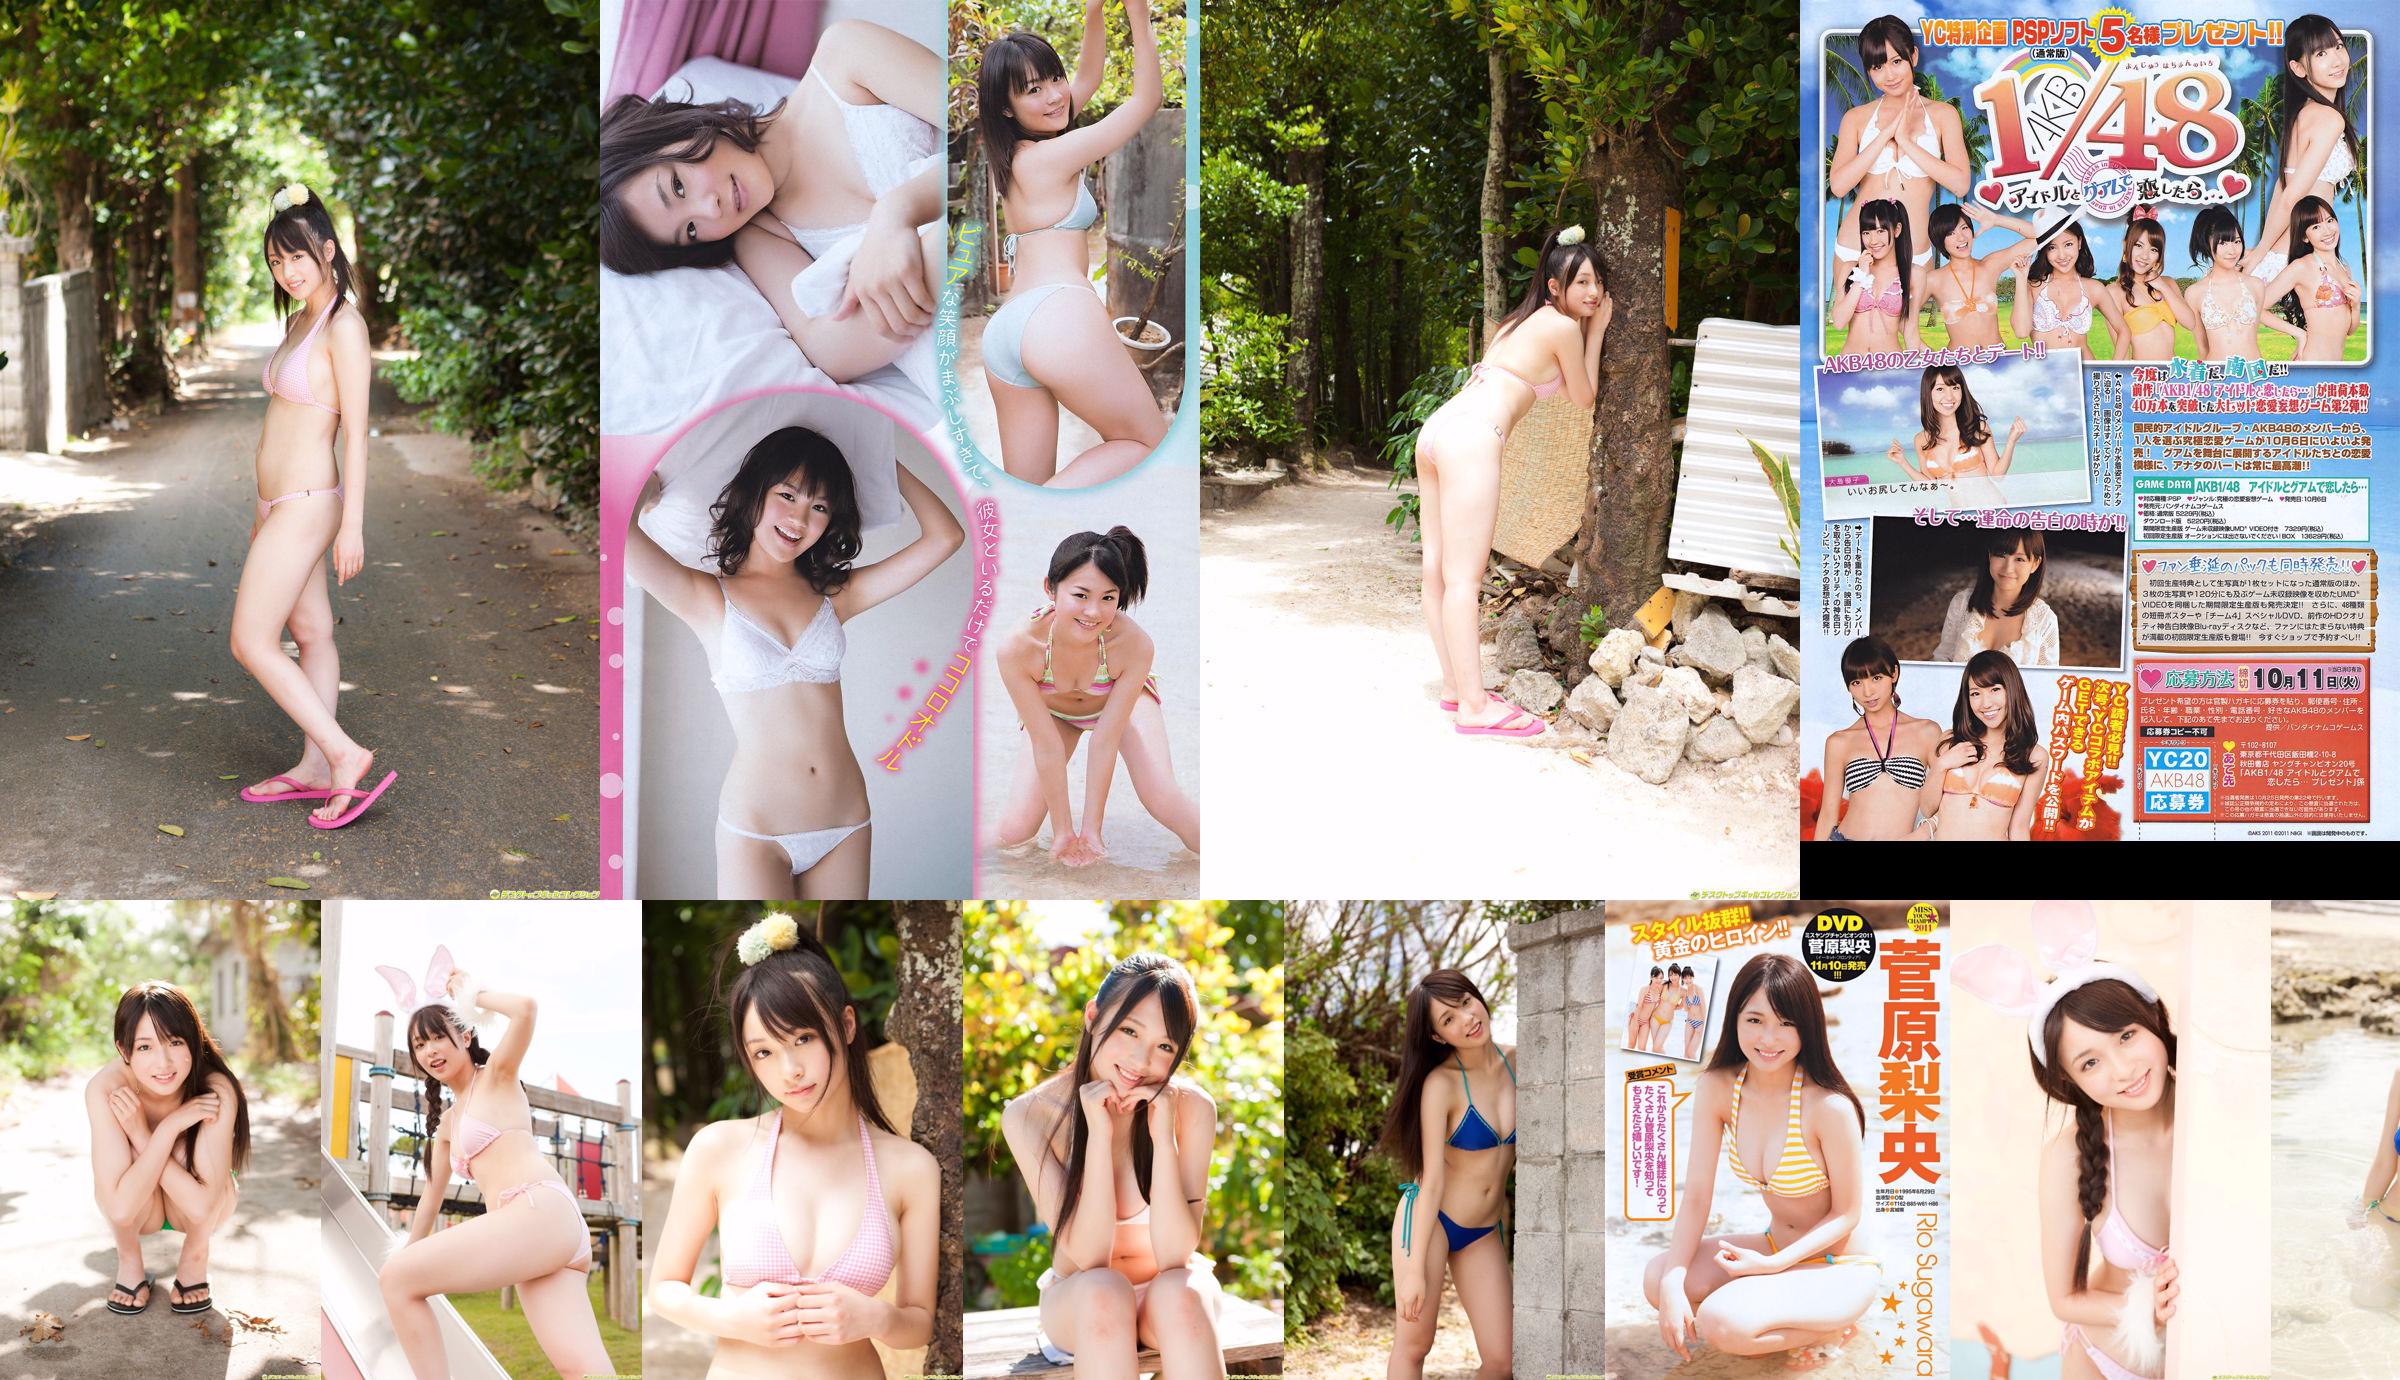 [Juara Muda] Sugawara Risa, Horikawa Mikako, Matsushima no atau Majalah Foto No. 20 2011 No.d200cf Halaman 7